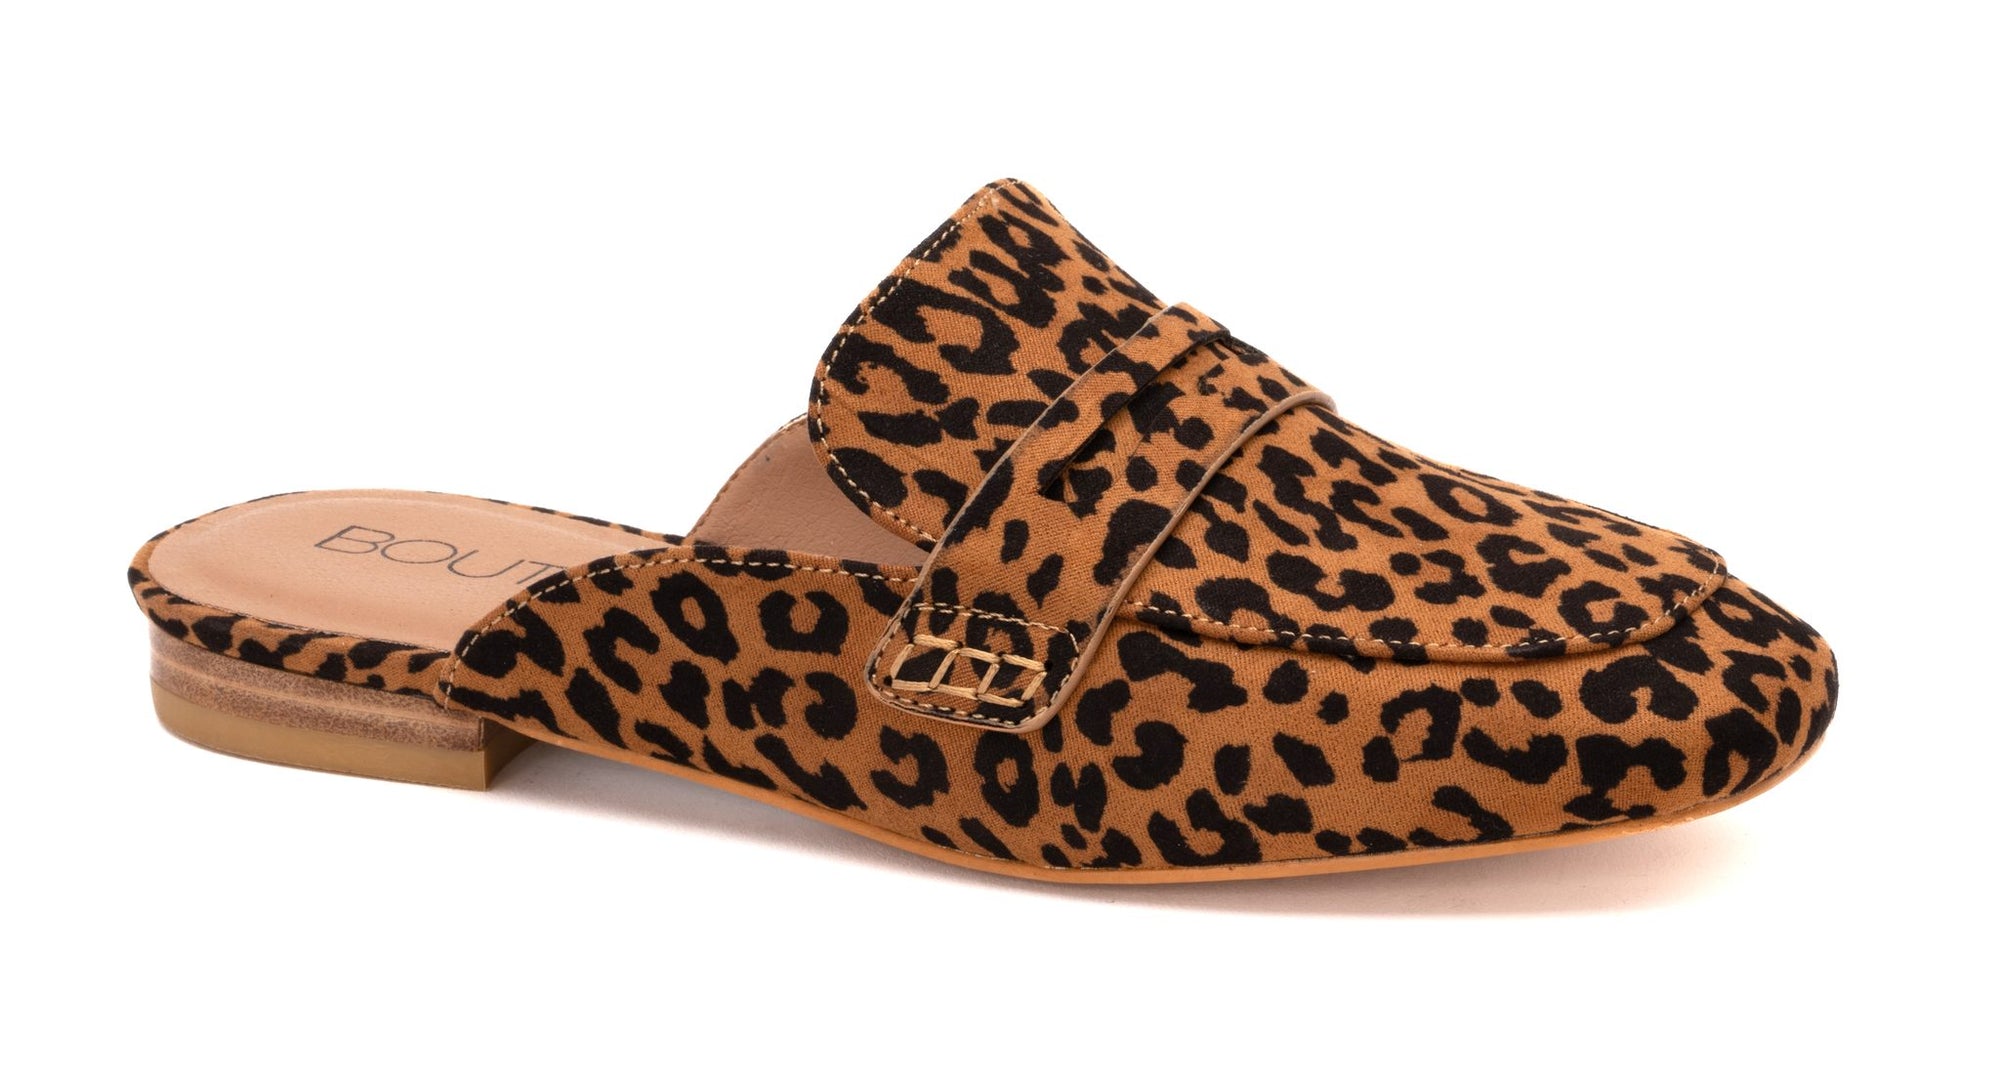 CORKYS Loafer Mule Slide - Leopard